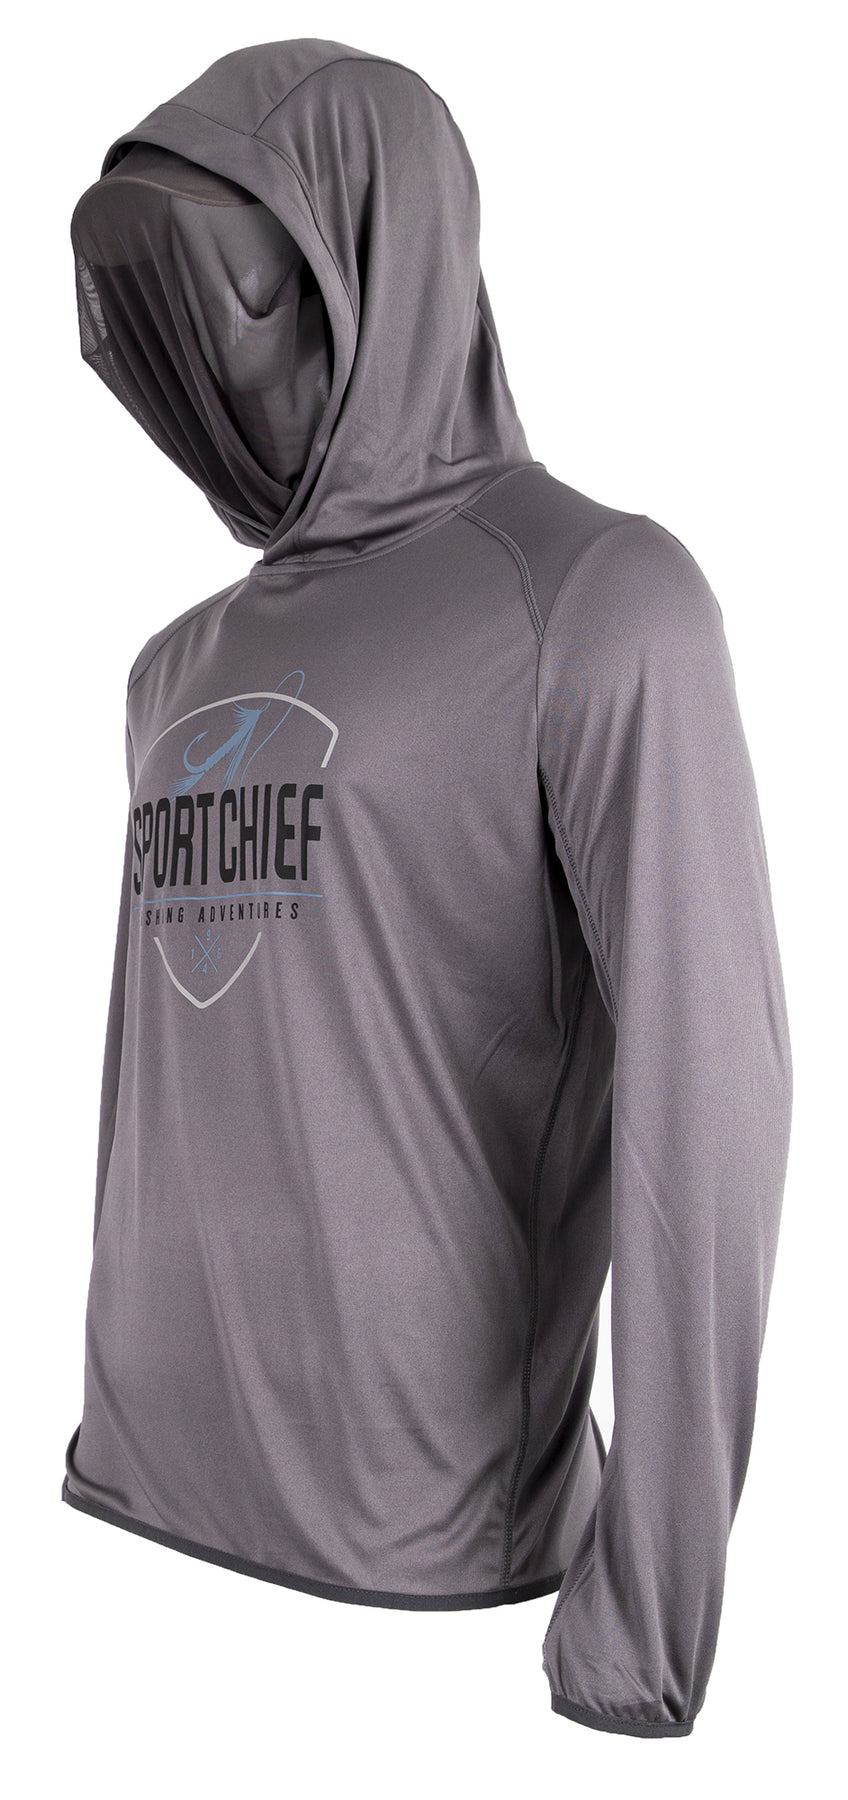 MILOT Men's Mosquito Repellent Hooded Fishing Sweater – Sportchief